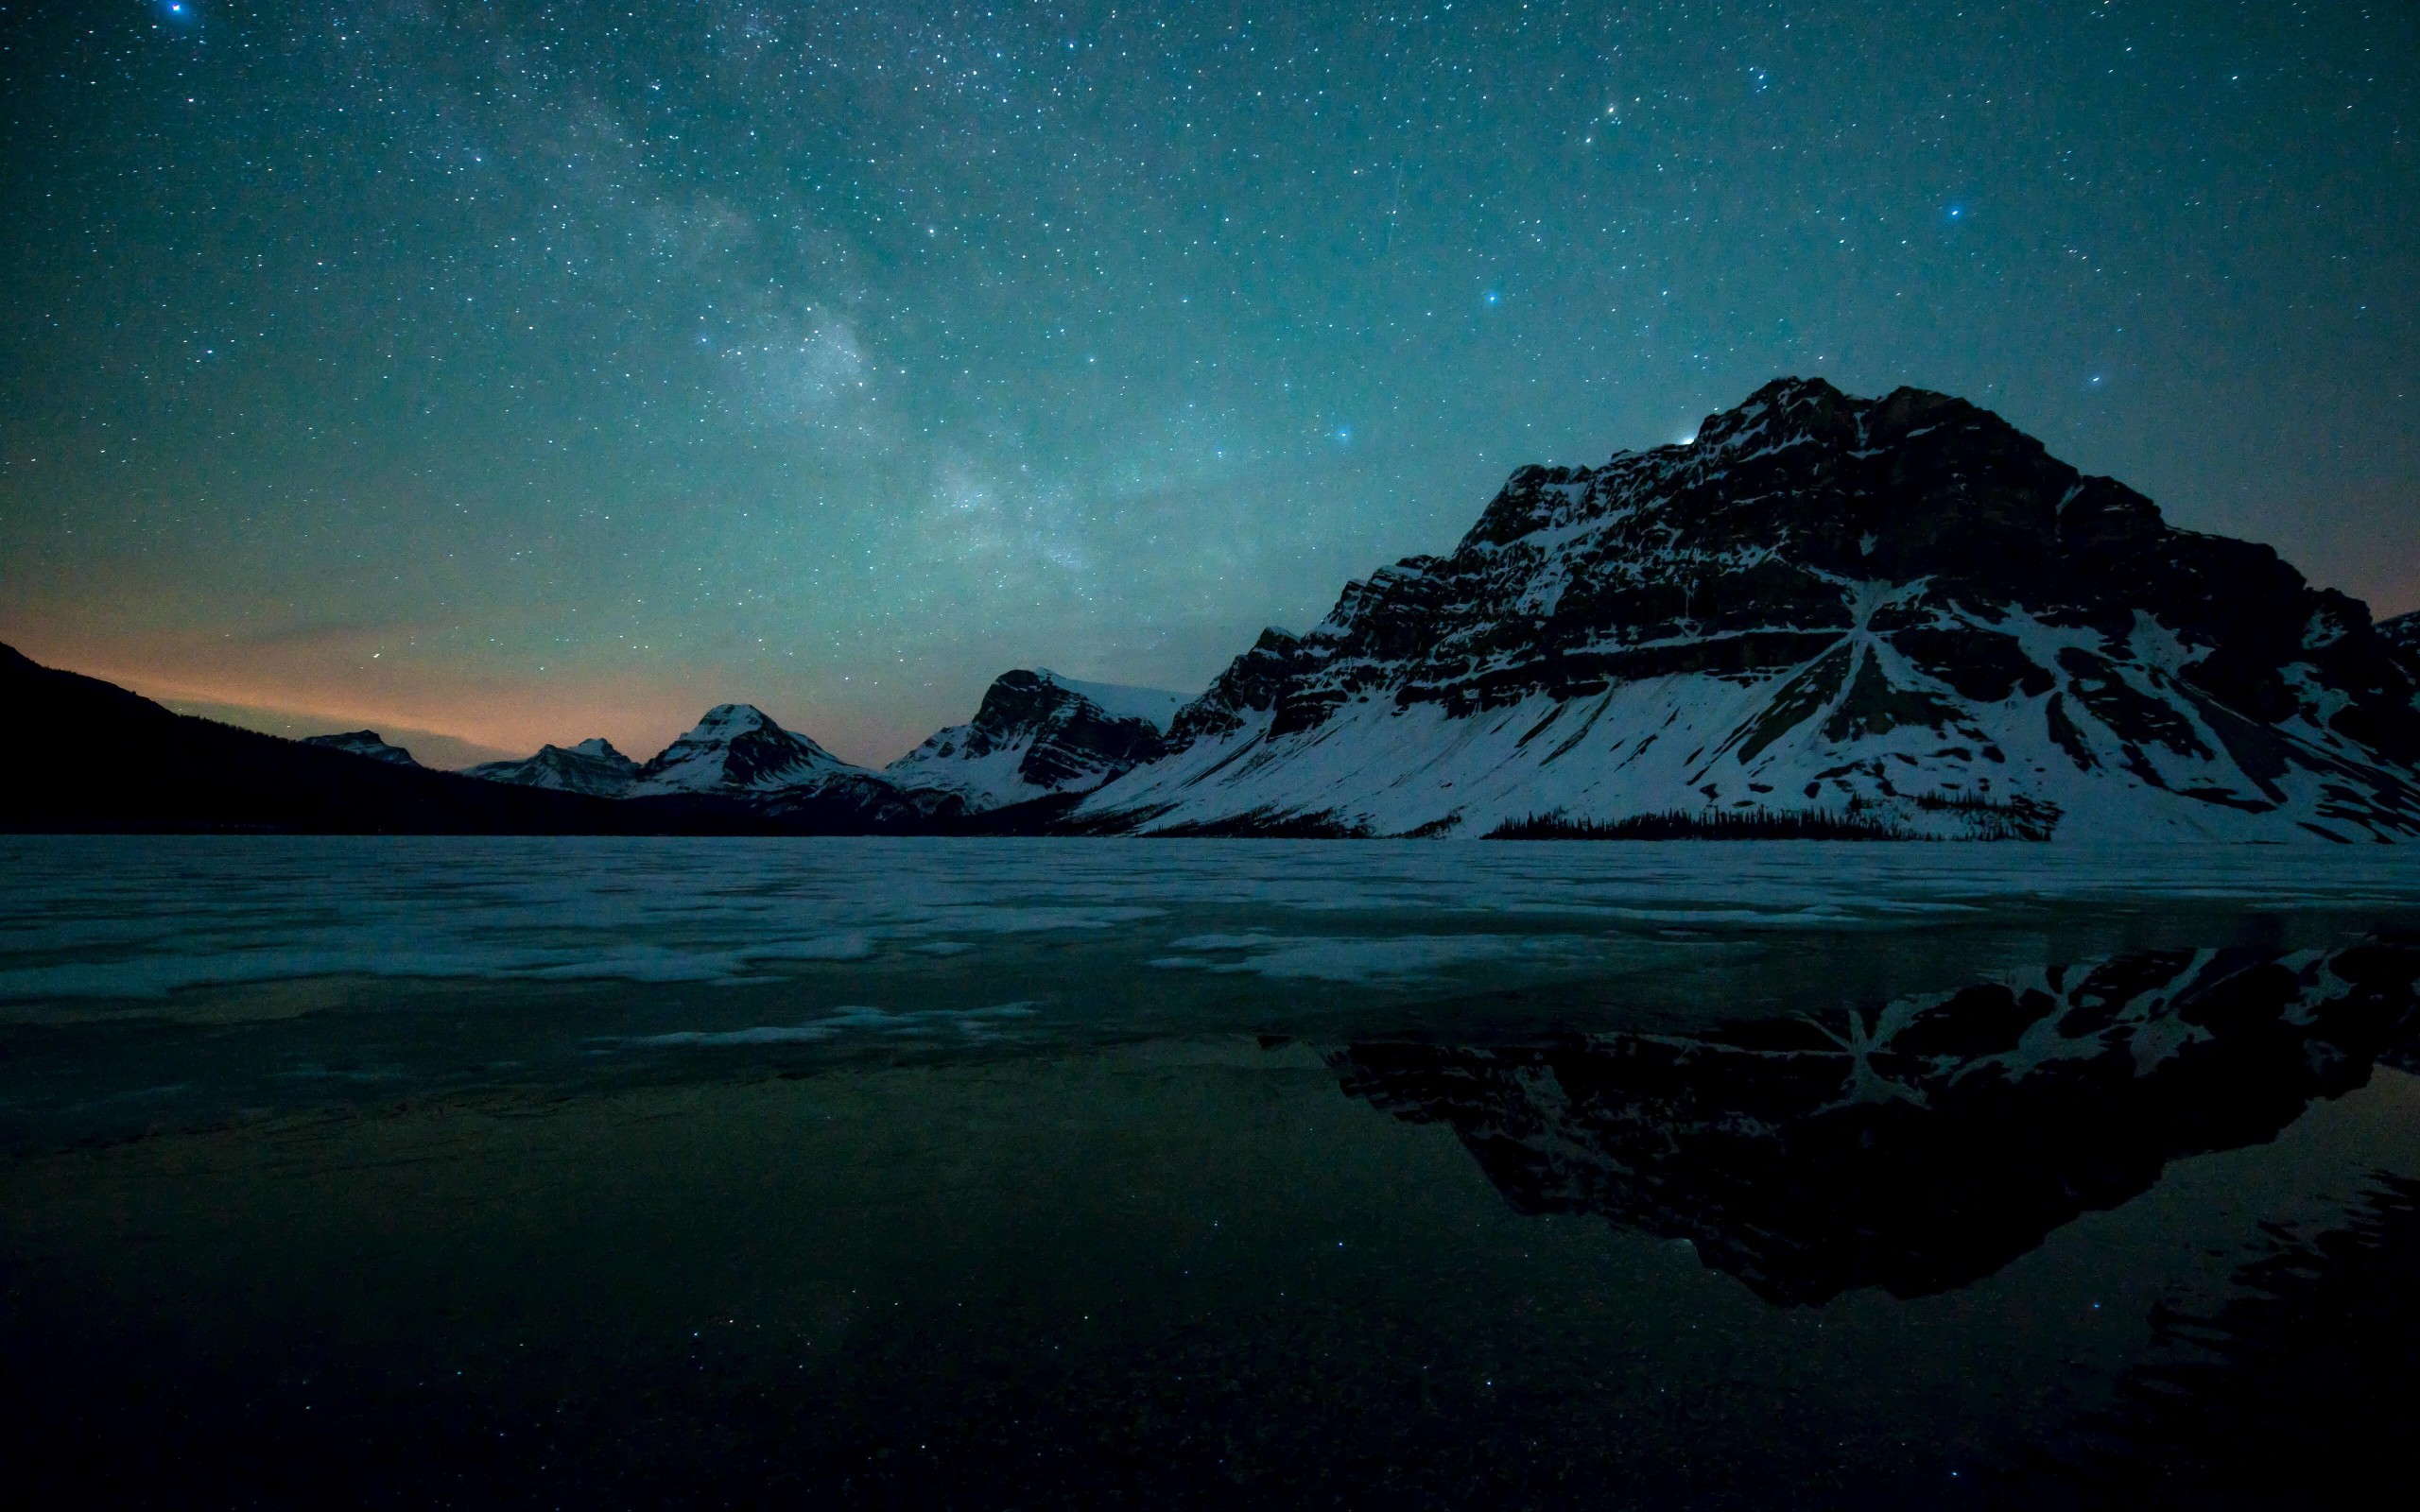 Milky Way over Bow Lake, Alberta, Canada Wallpaper for Desktop 2560x1600